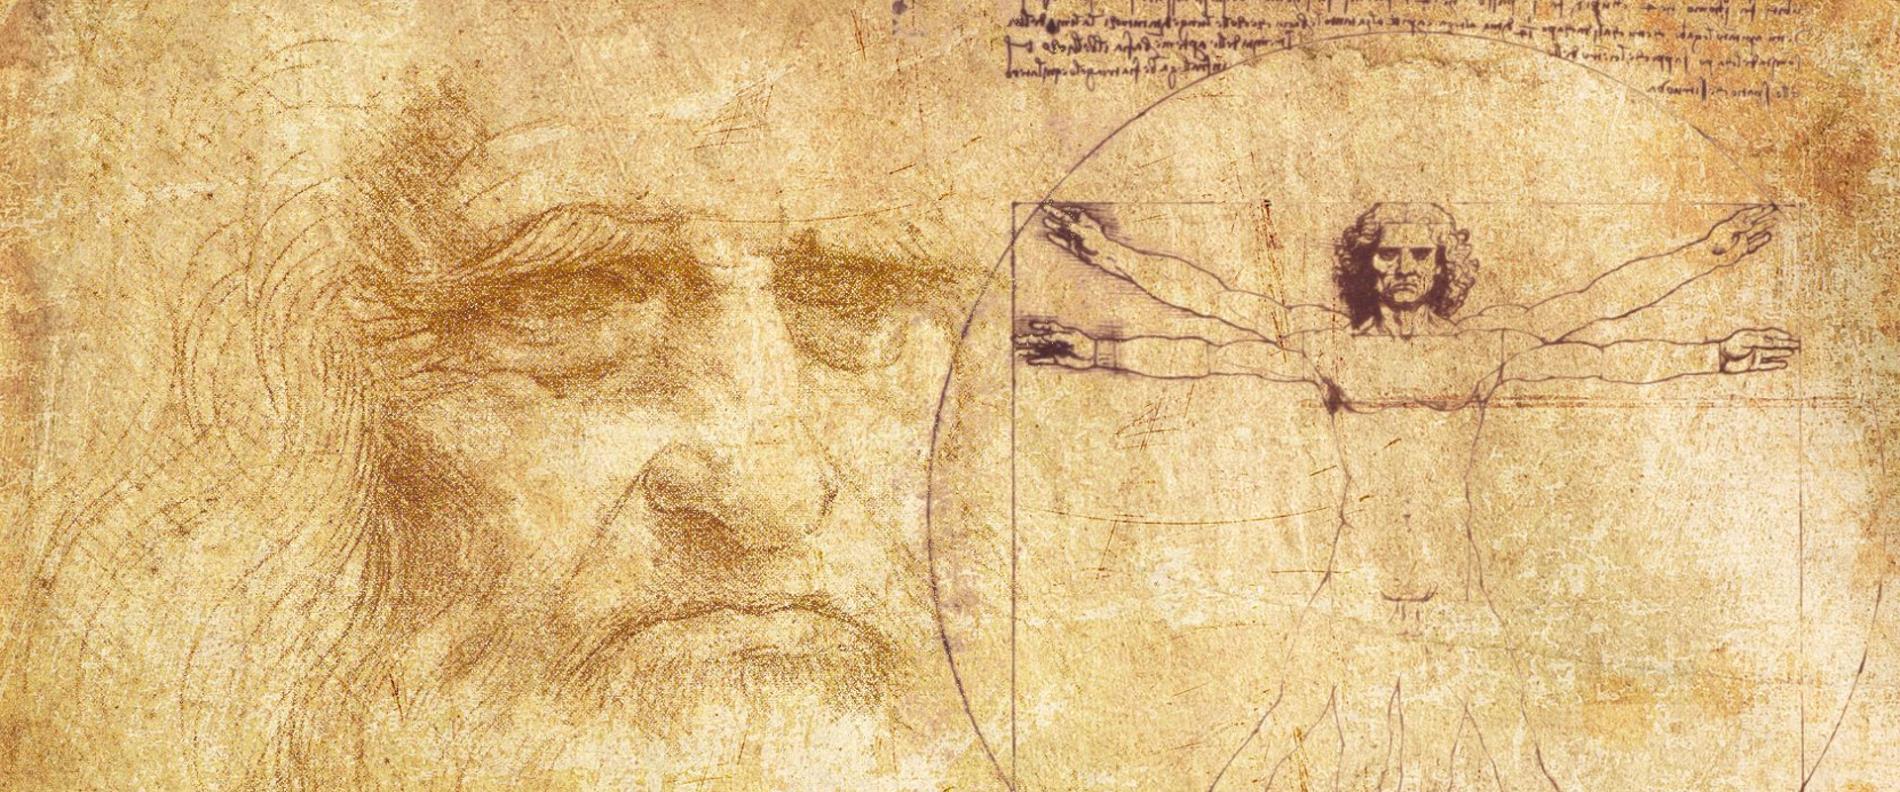 Milano e Leonardo Da Vinci 